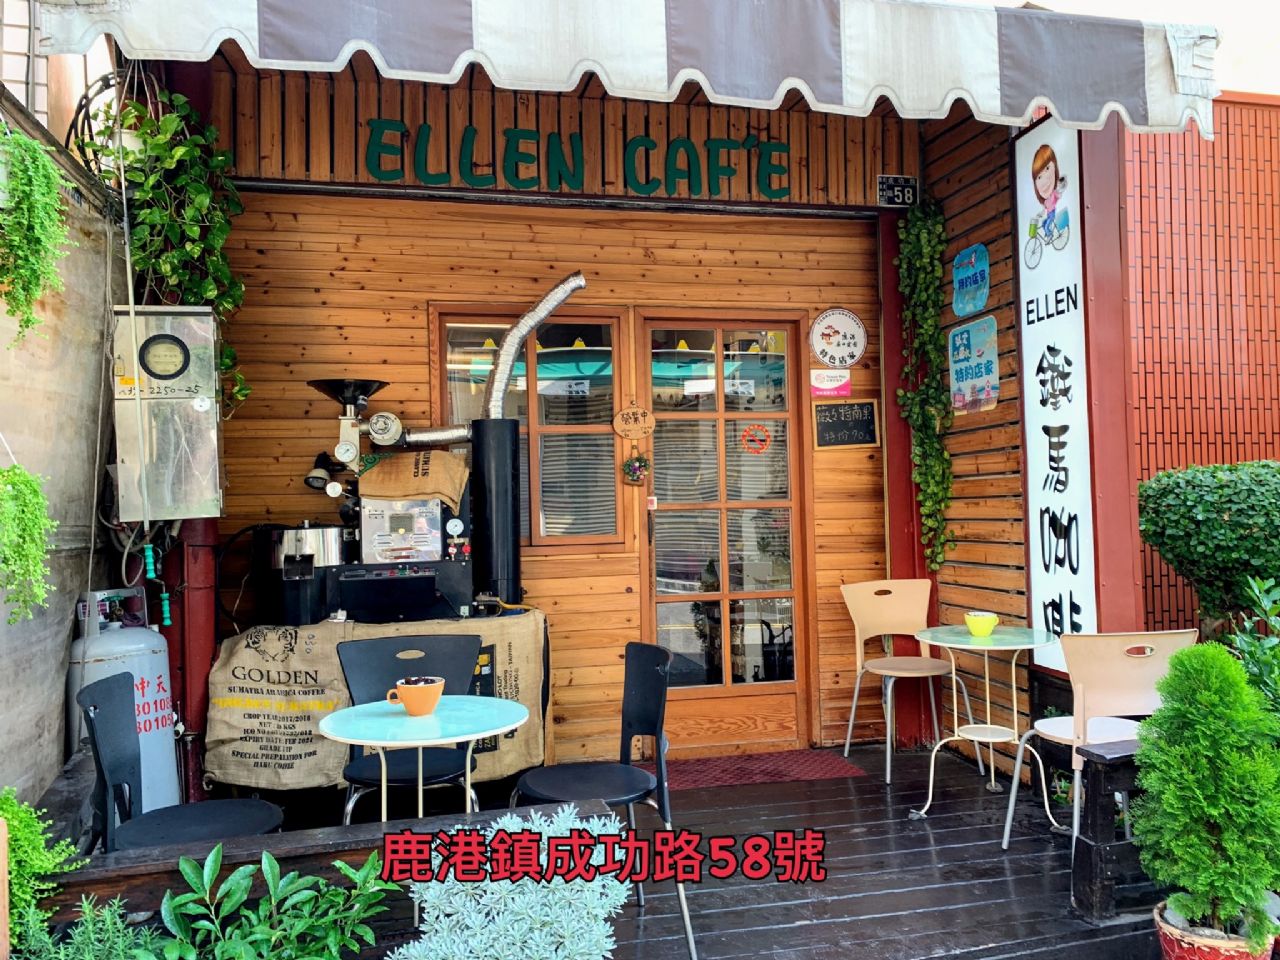 Ellen鐵馬咖啡 鮮烘咖啡專賣店